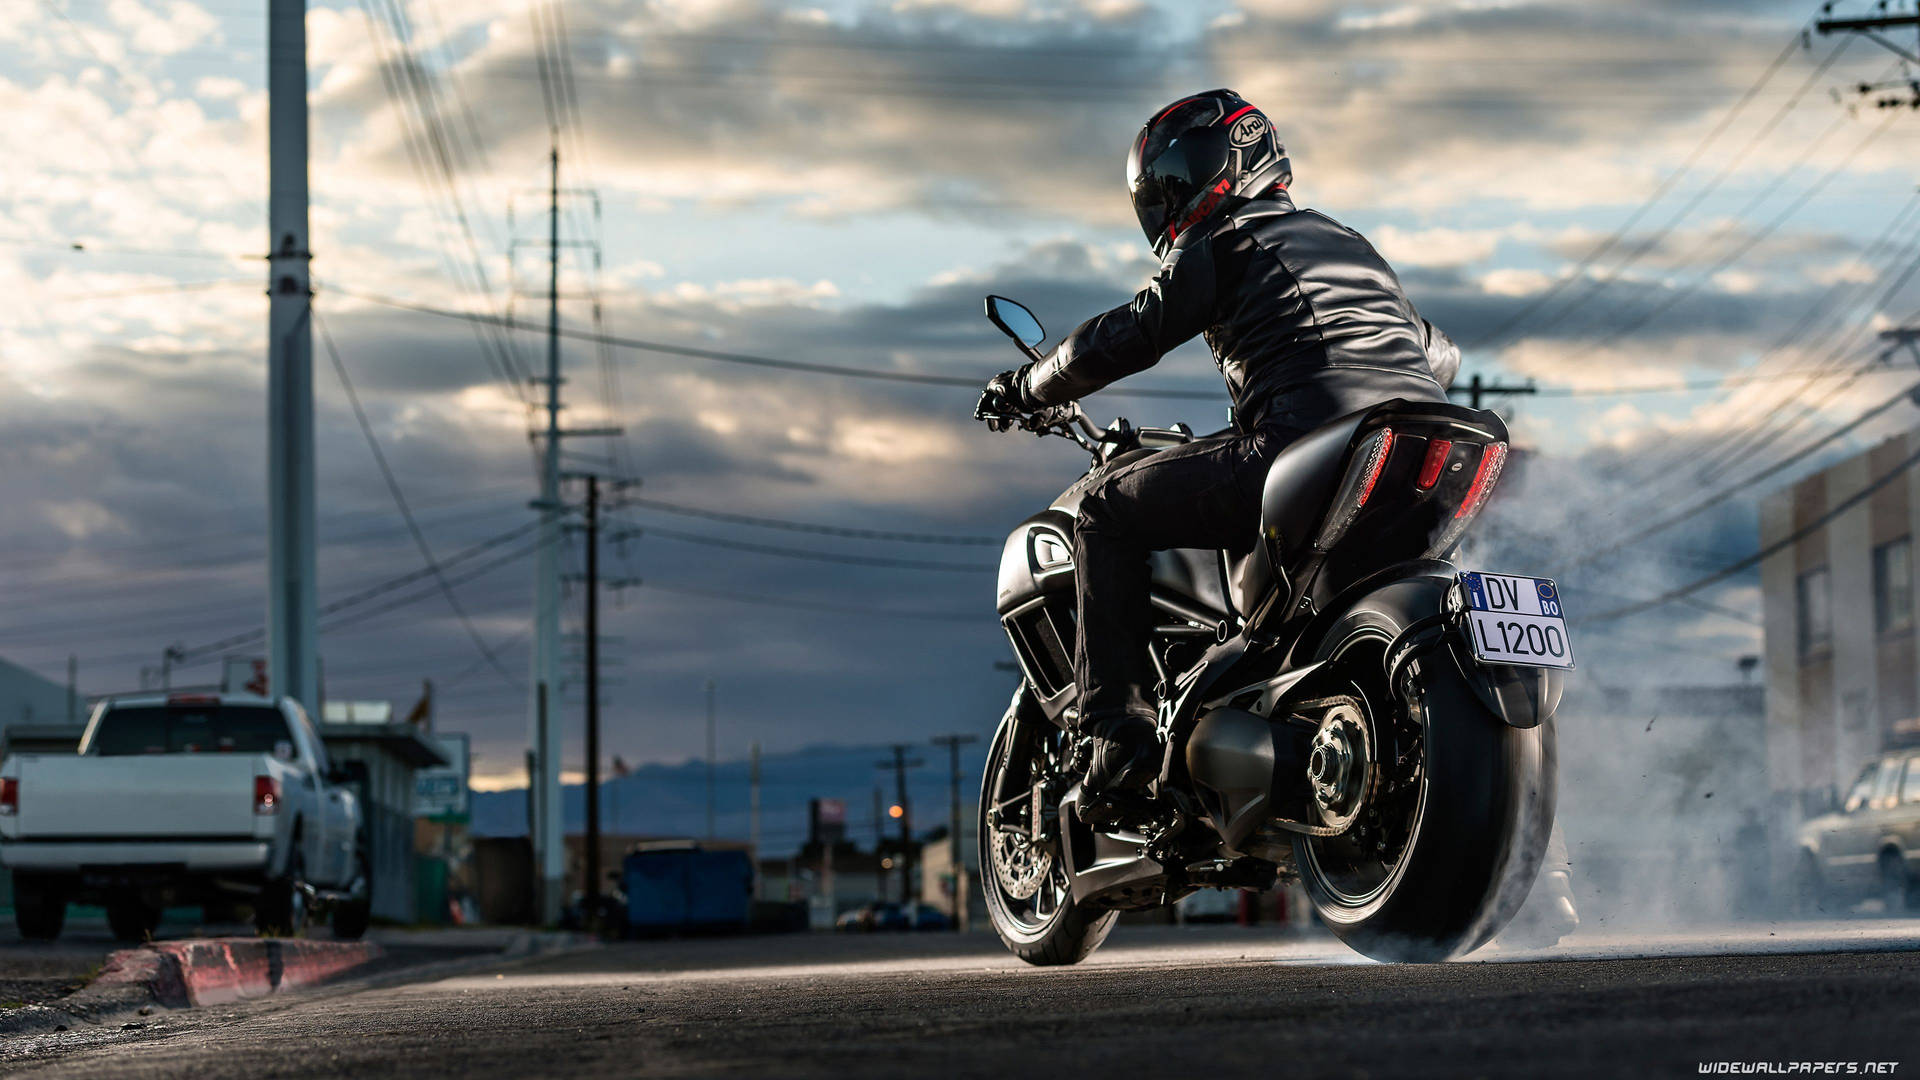 Download 4k Bike Rider On A Ducati Wallpaper 